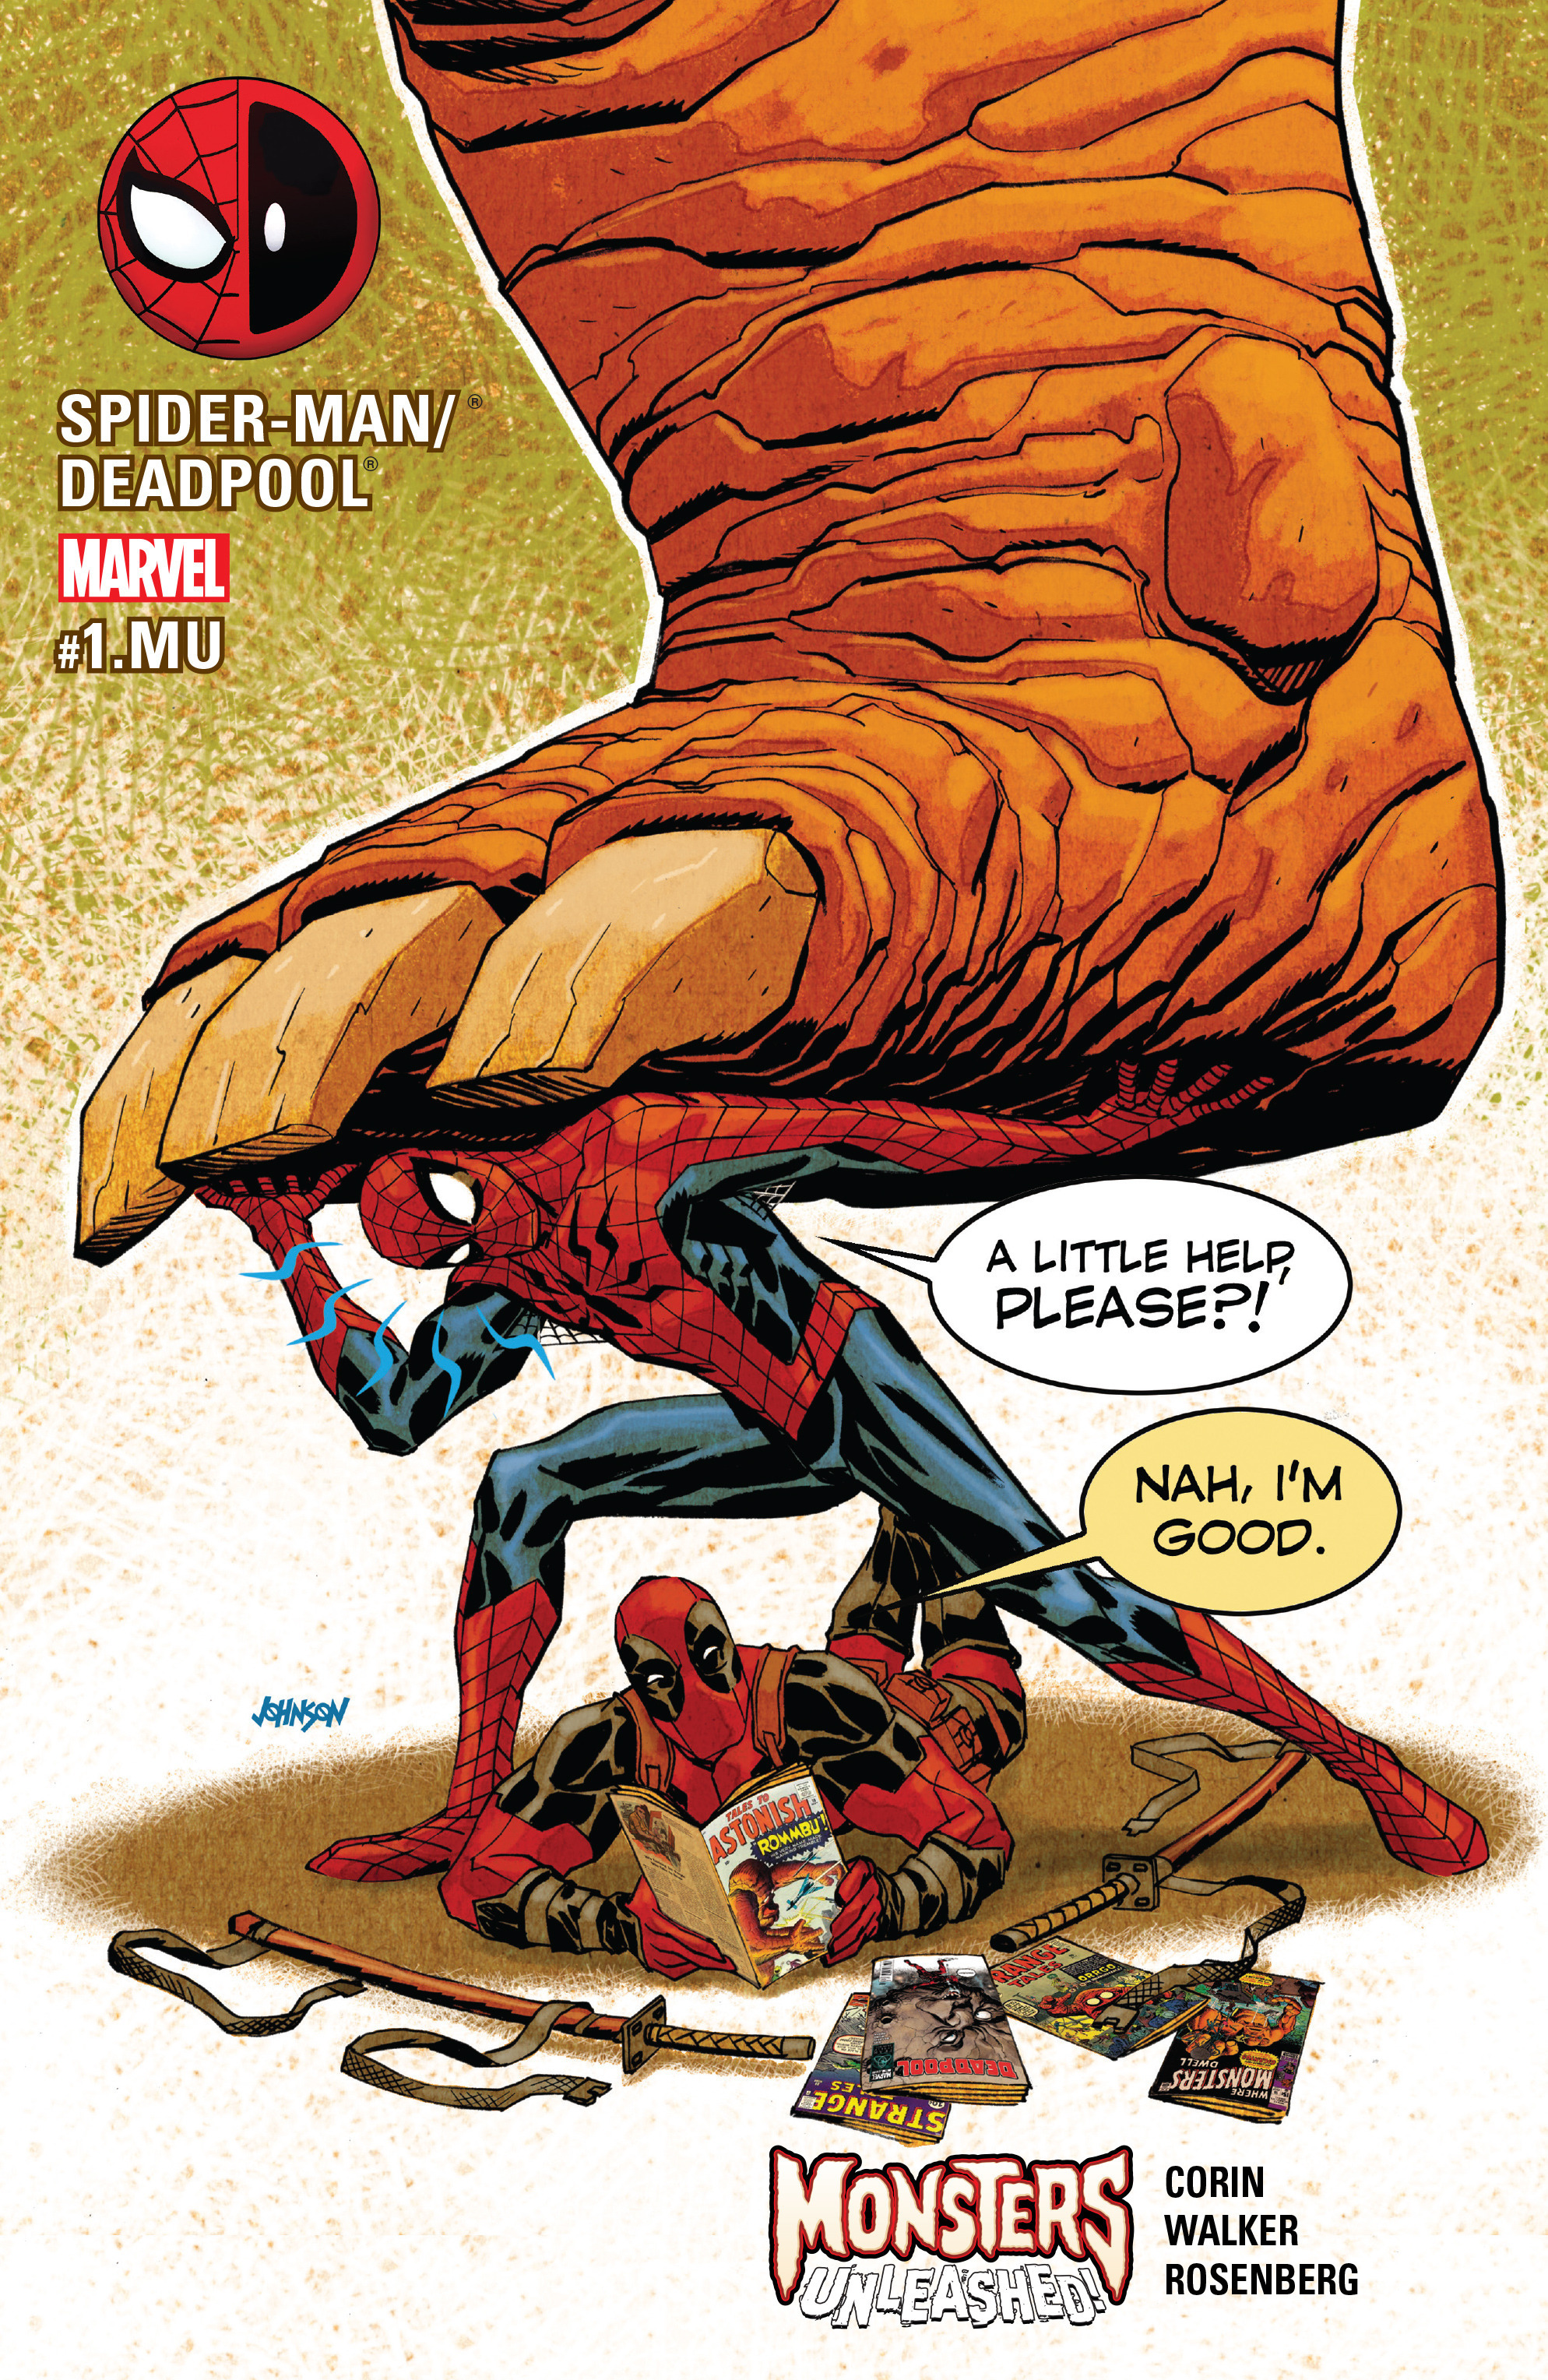 Spider Man Deadpool Issue 1 Mu | Read Spider Man Deadpool Issue 1 Mu comic  online in high quality. Read Full Comic online for free - Read comics online  in high quality .|